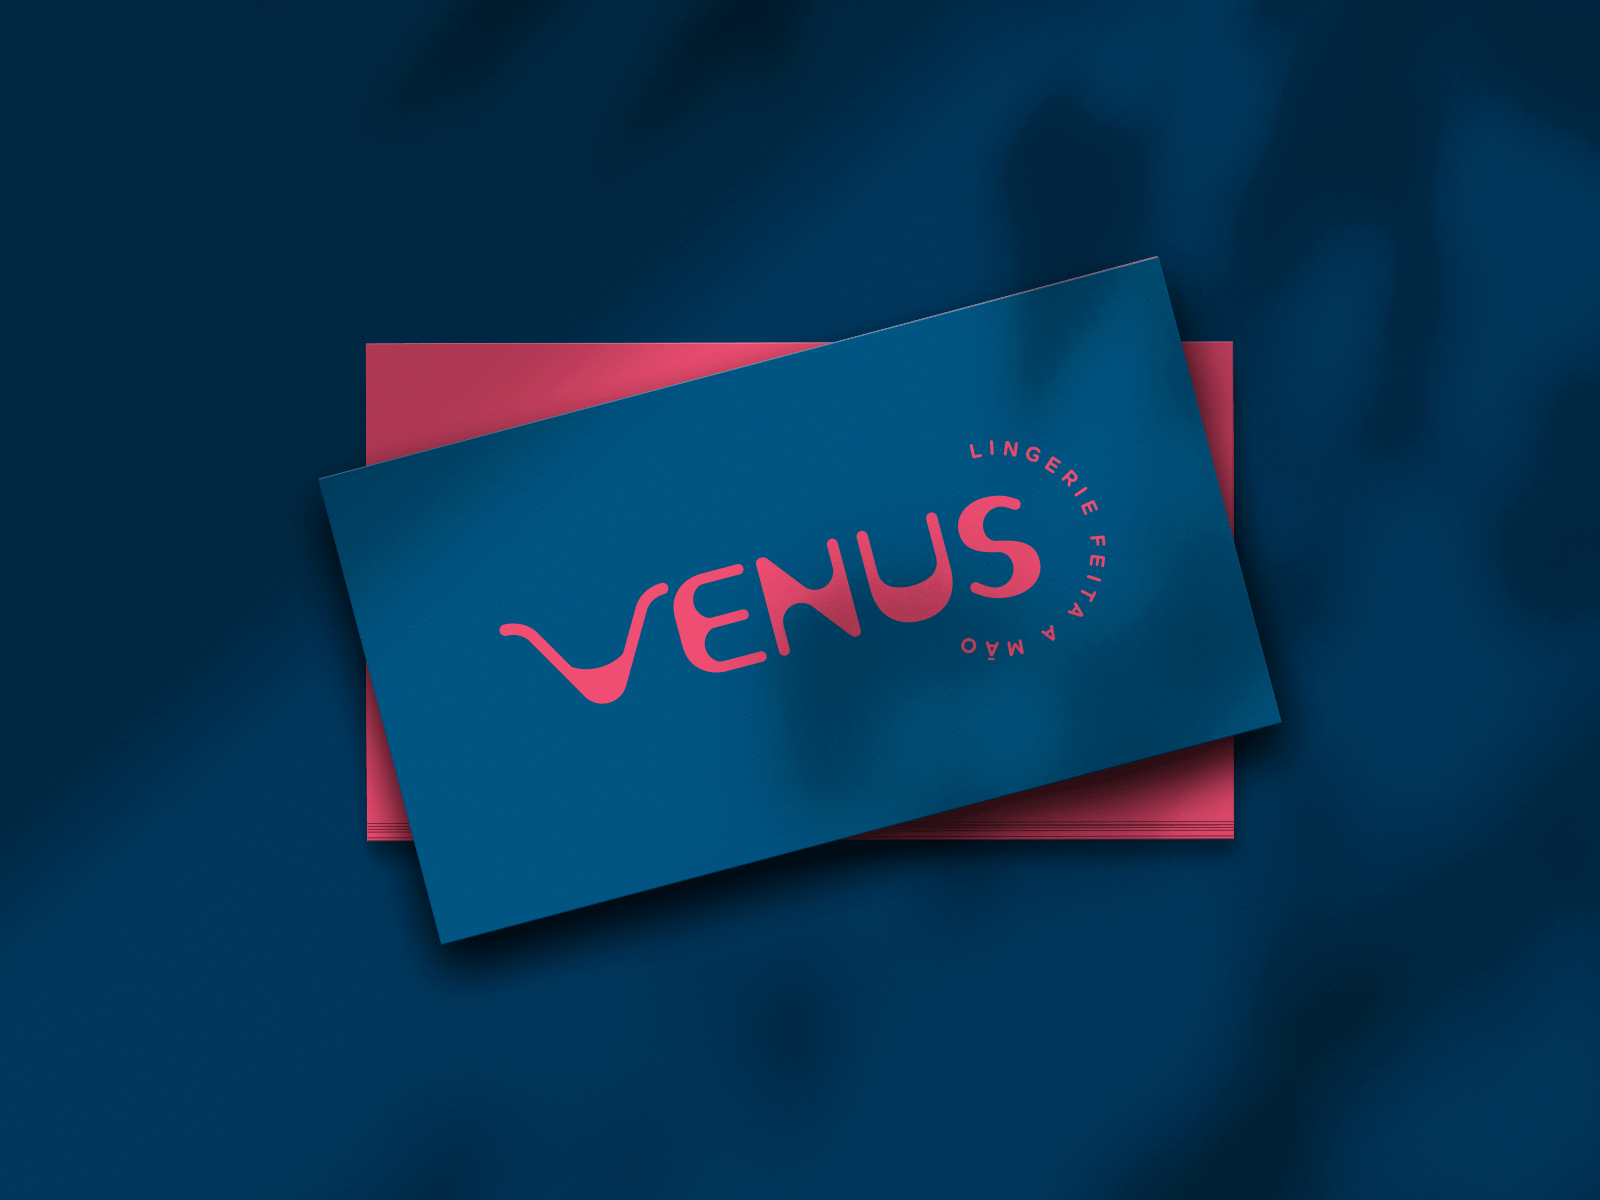 Venus Handmade lingerie